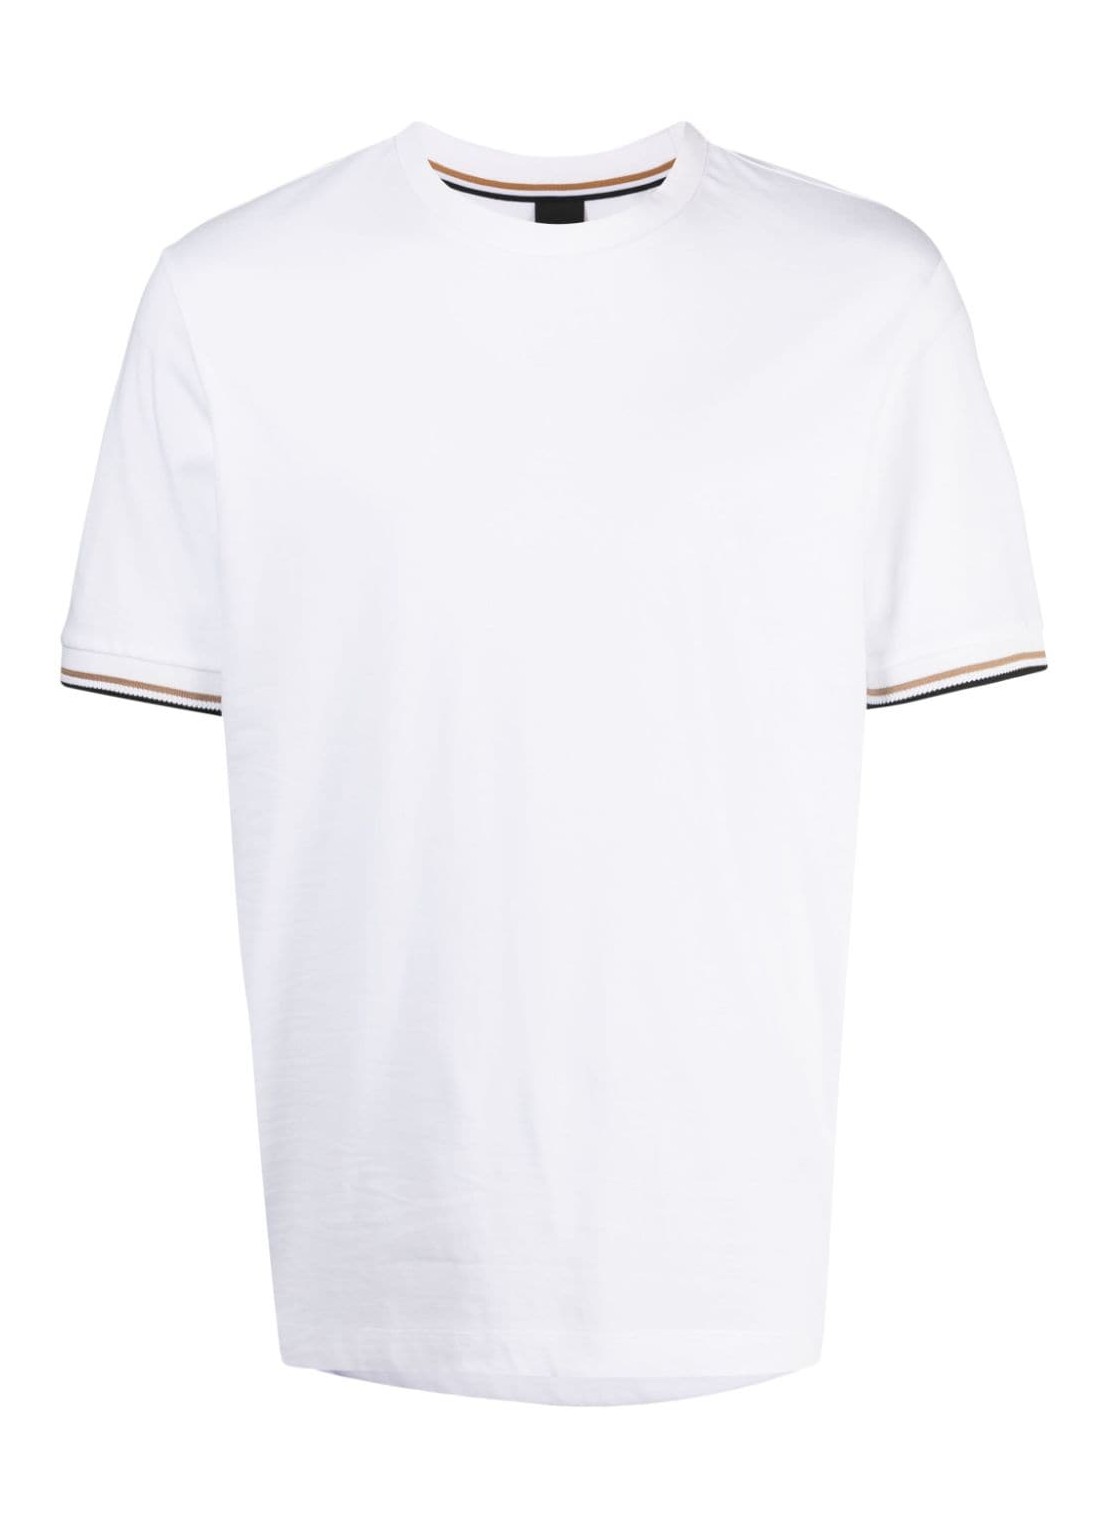 Camiseta boss t-shirt man thompson 04 50501097 100 talla XXL
 